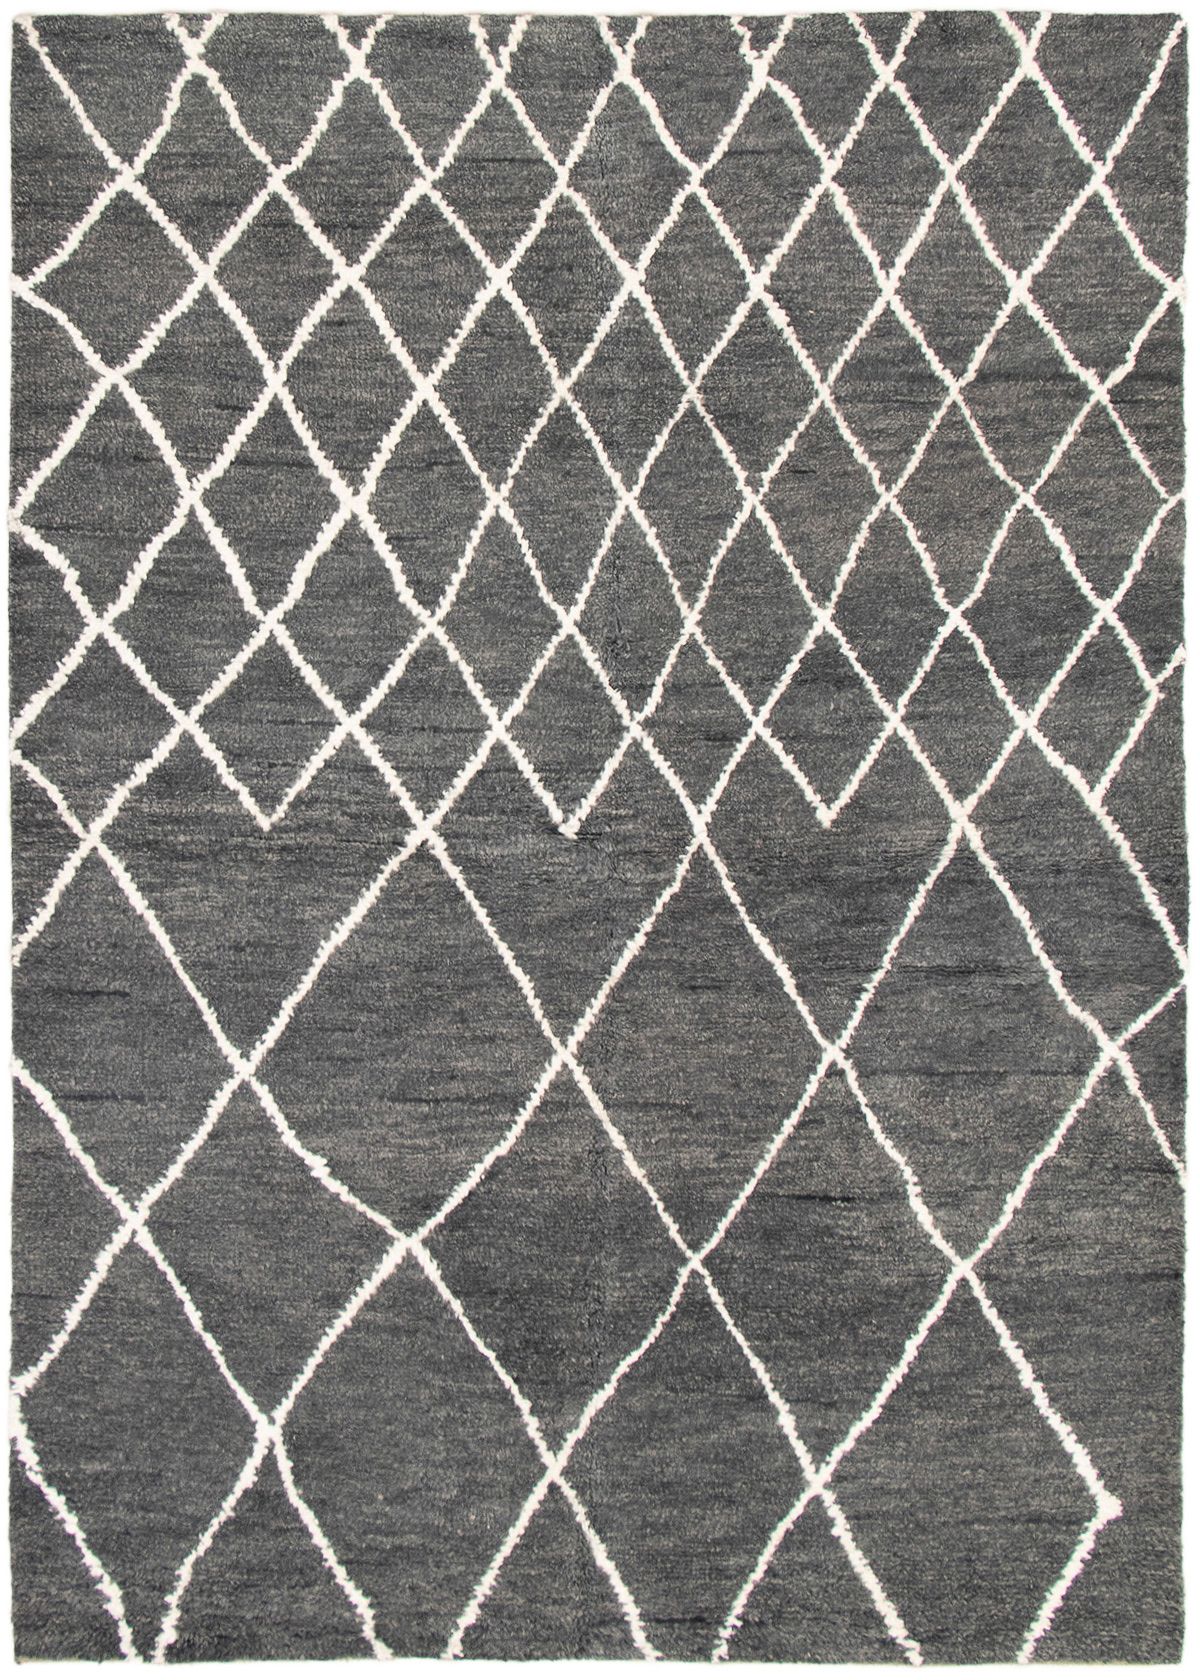 Hand-knotted Arlequin Dark Grey Wool Rug 6'0" x 9'0" Size: 6'0" x 9'0"  